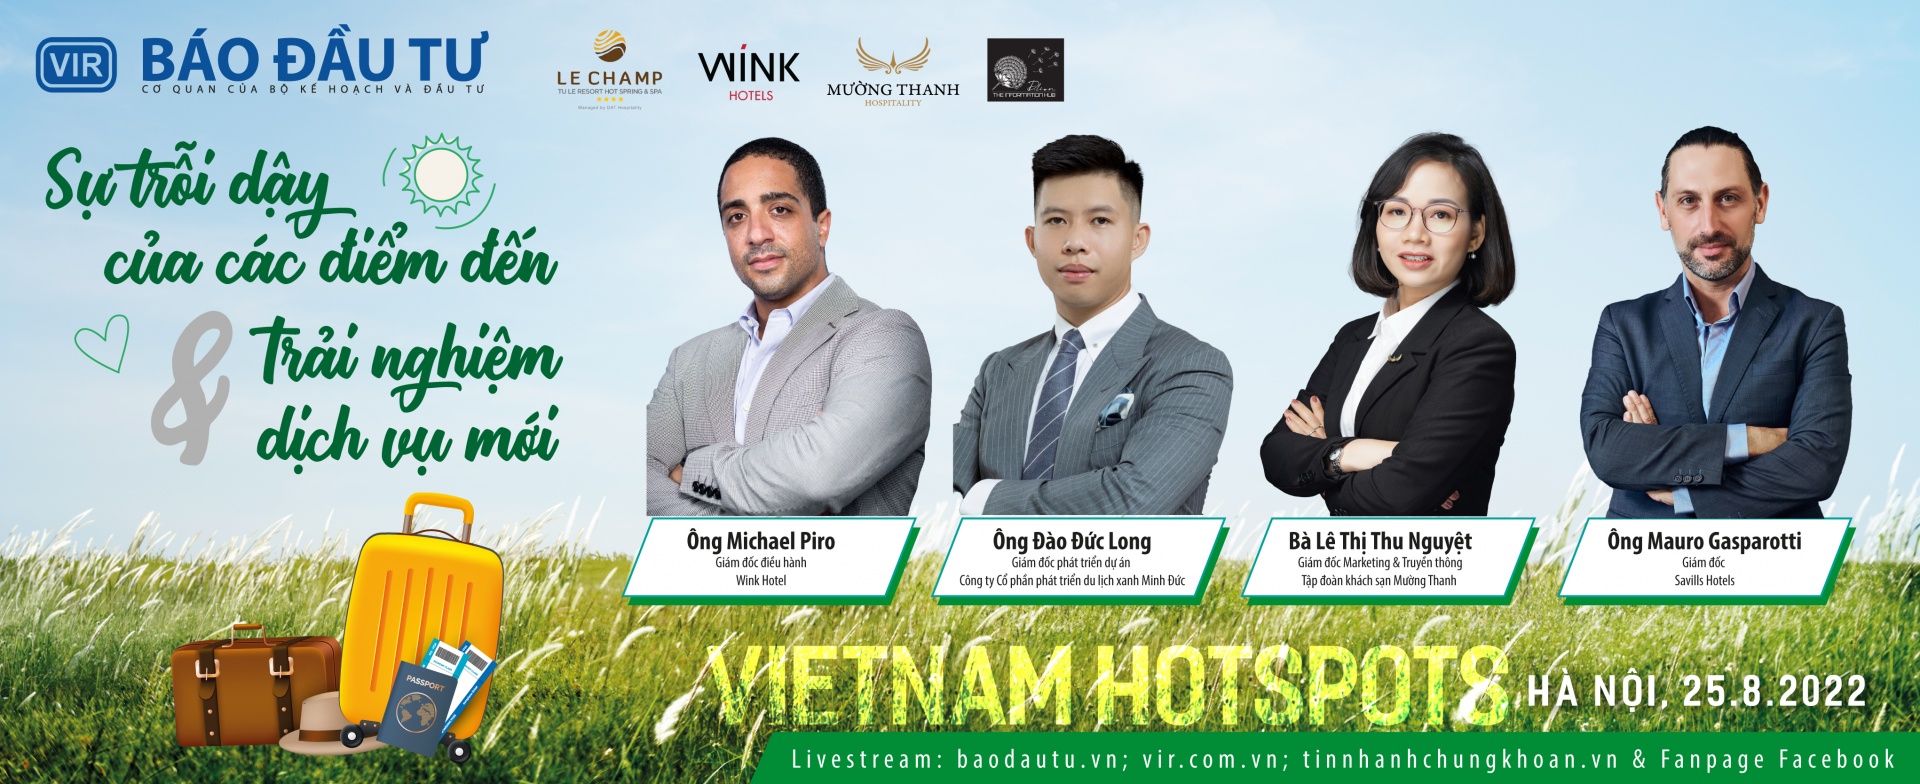 Talk show presents Vietnam's emerging tourism hotspots